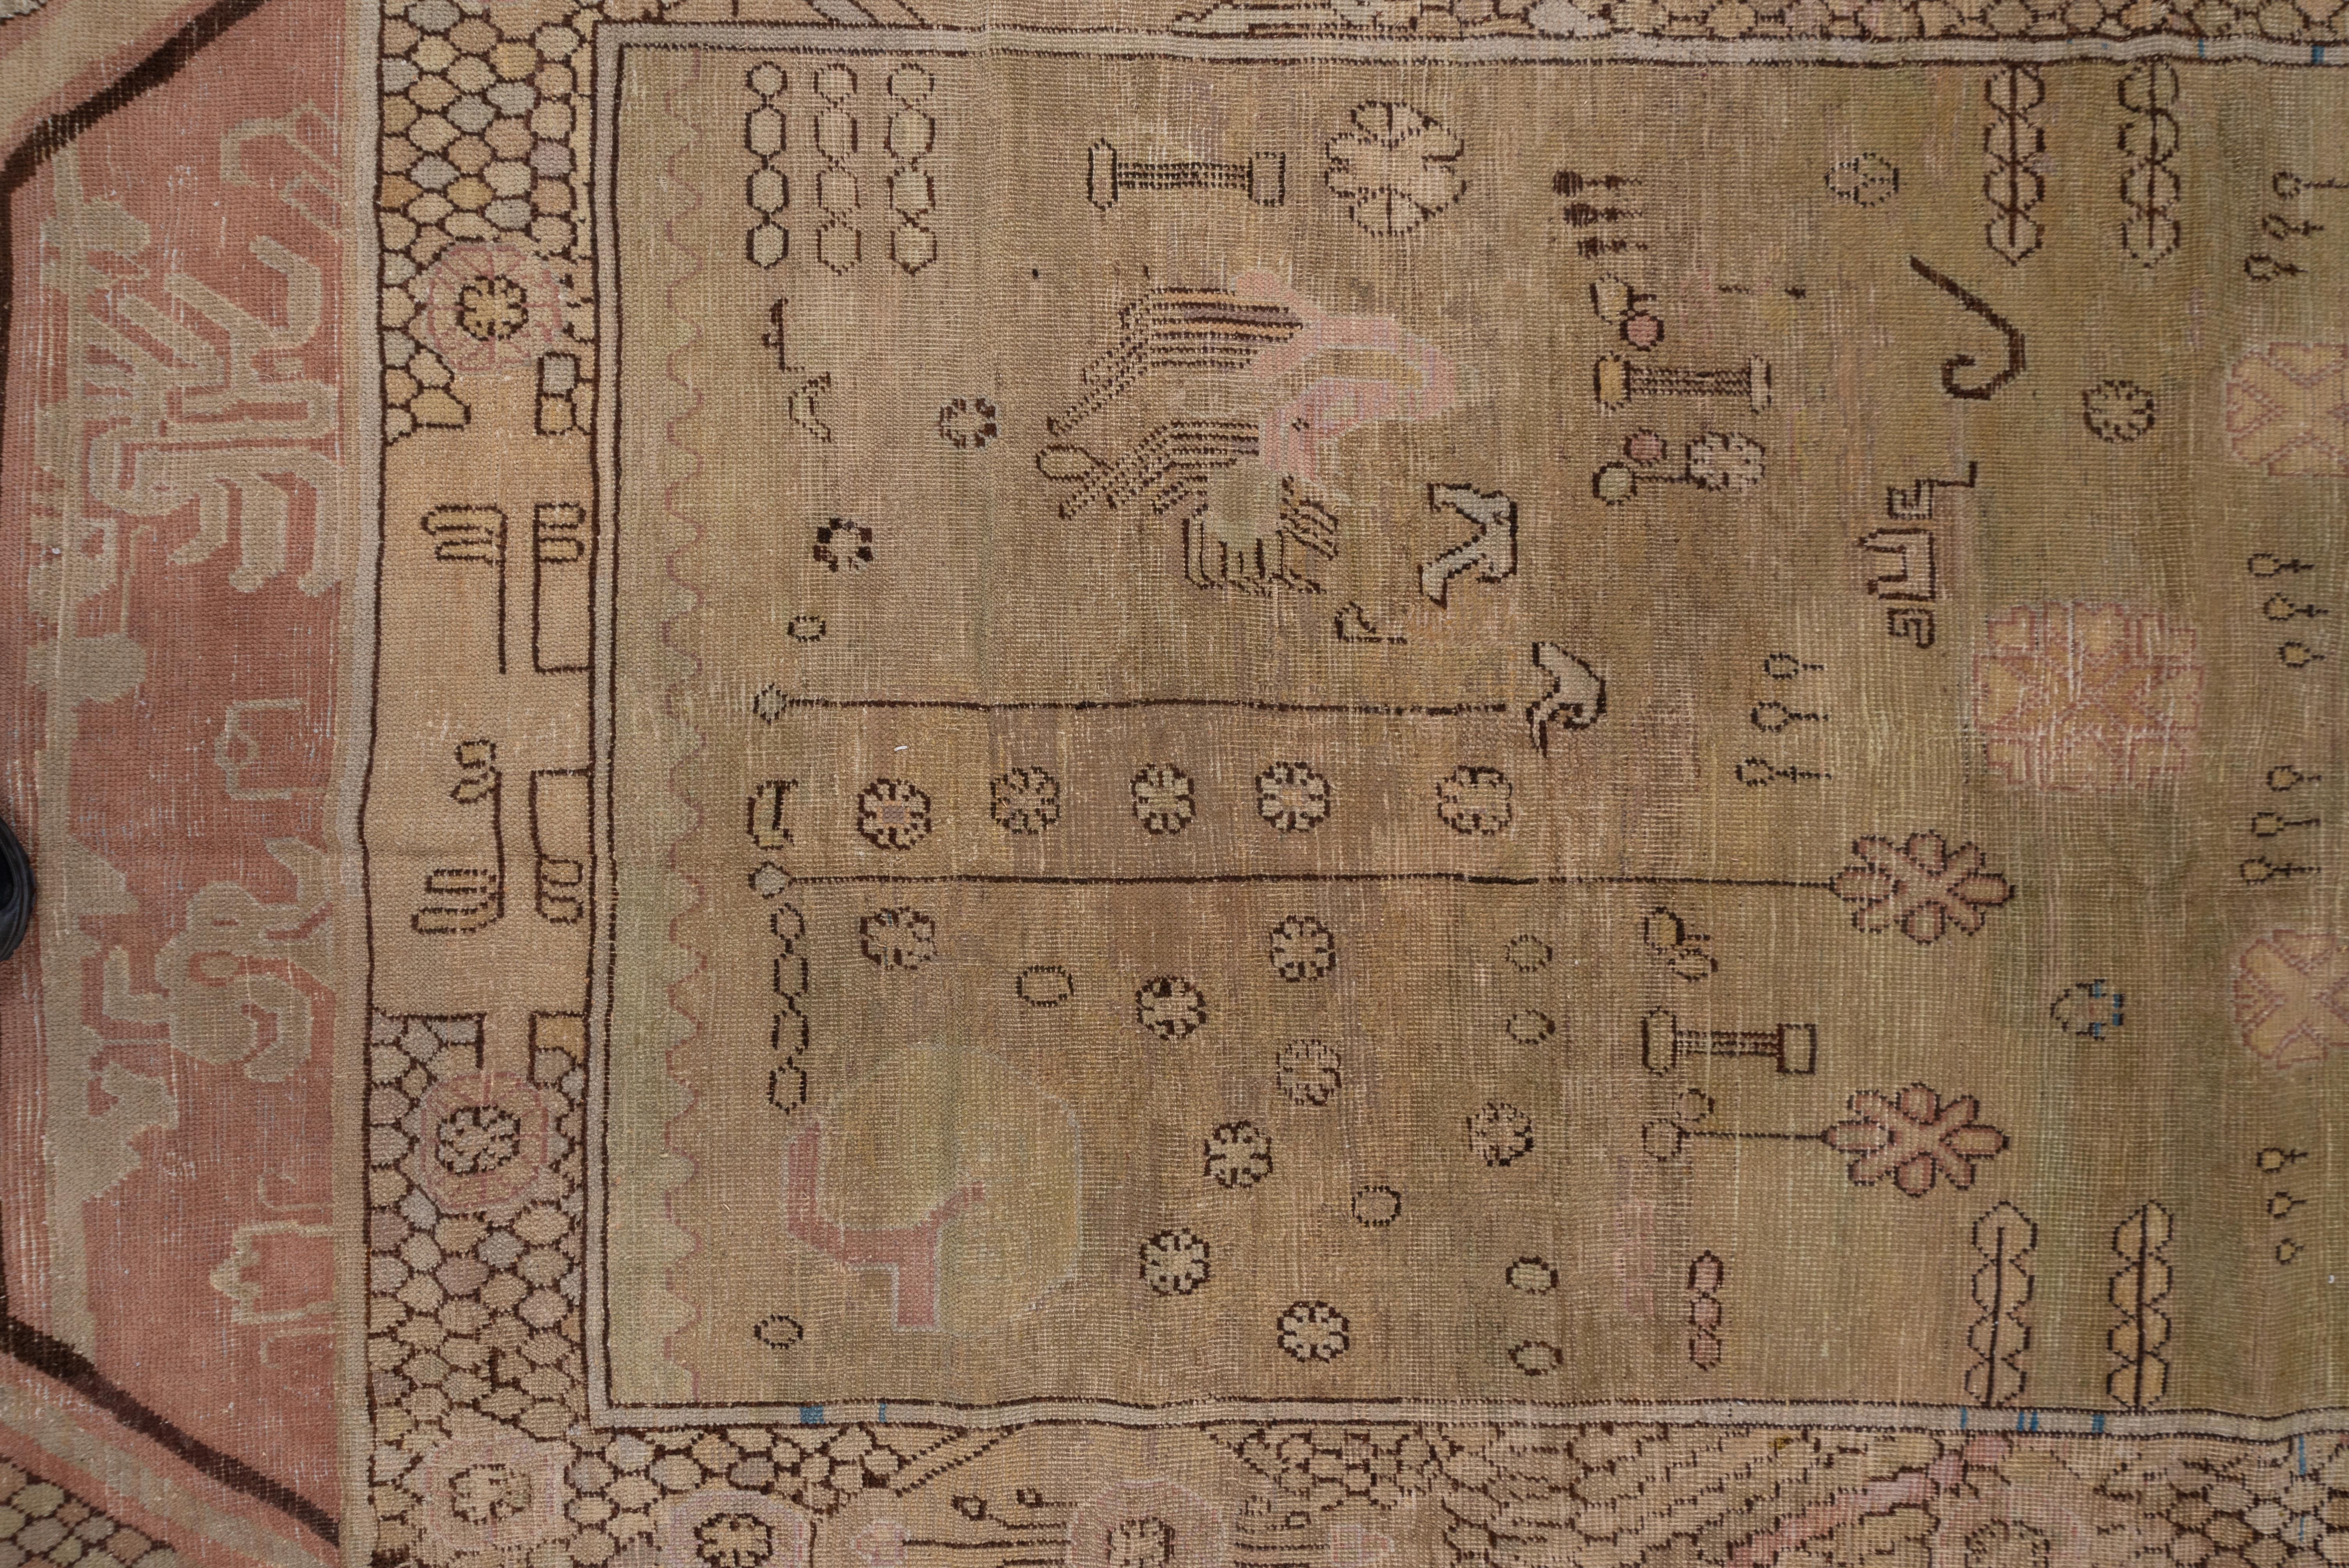 Hand-Knotted Antique Pictorial Khotan Carpet, Soft Tones Soft Palette, Allover Detailed Field